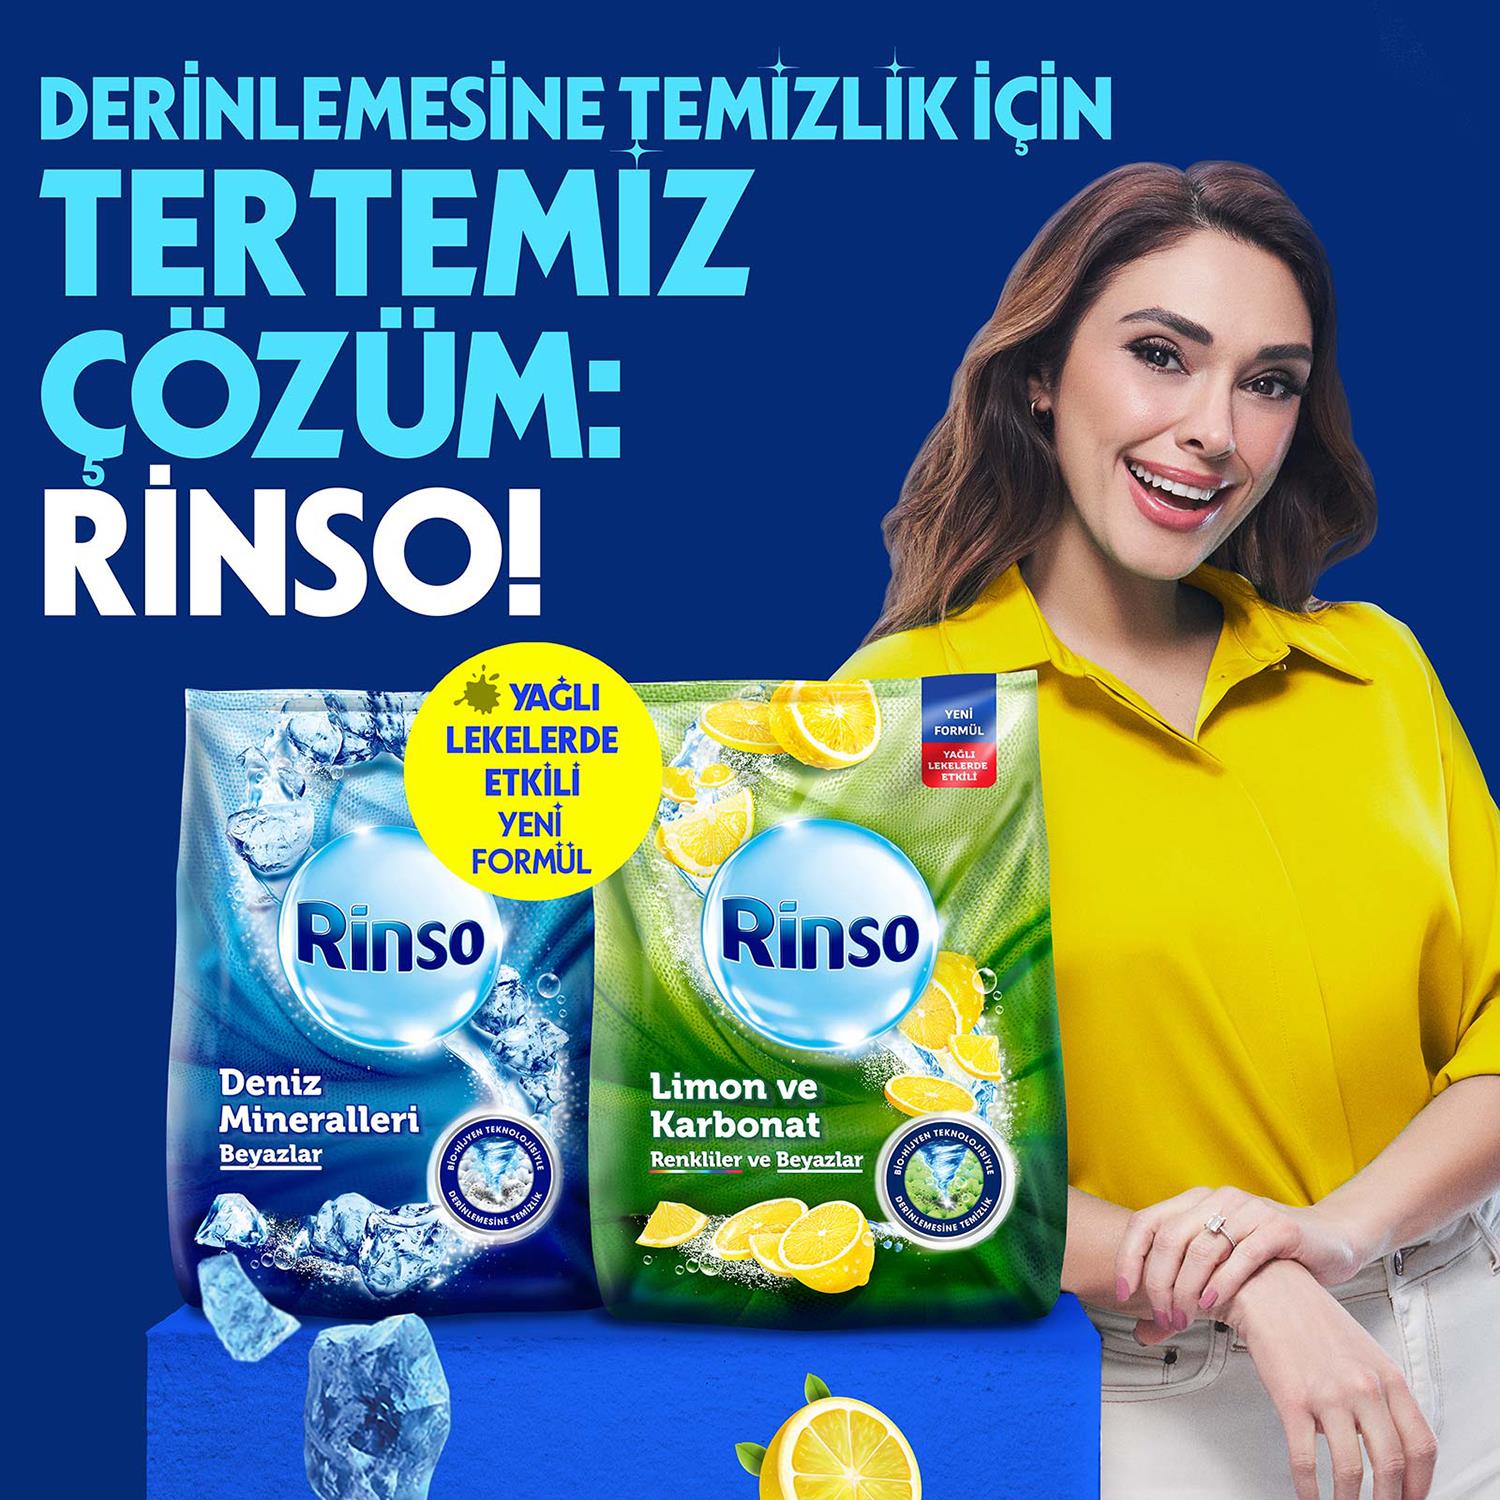 Rinso Matik Limon Karbonat Çamaşır Deterjanı 8 kg - Onur Market